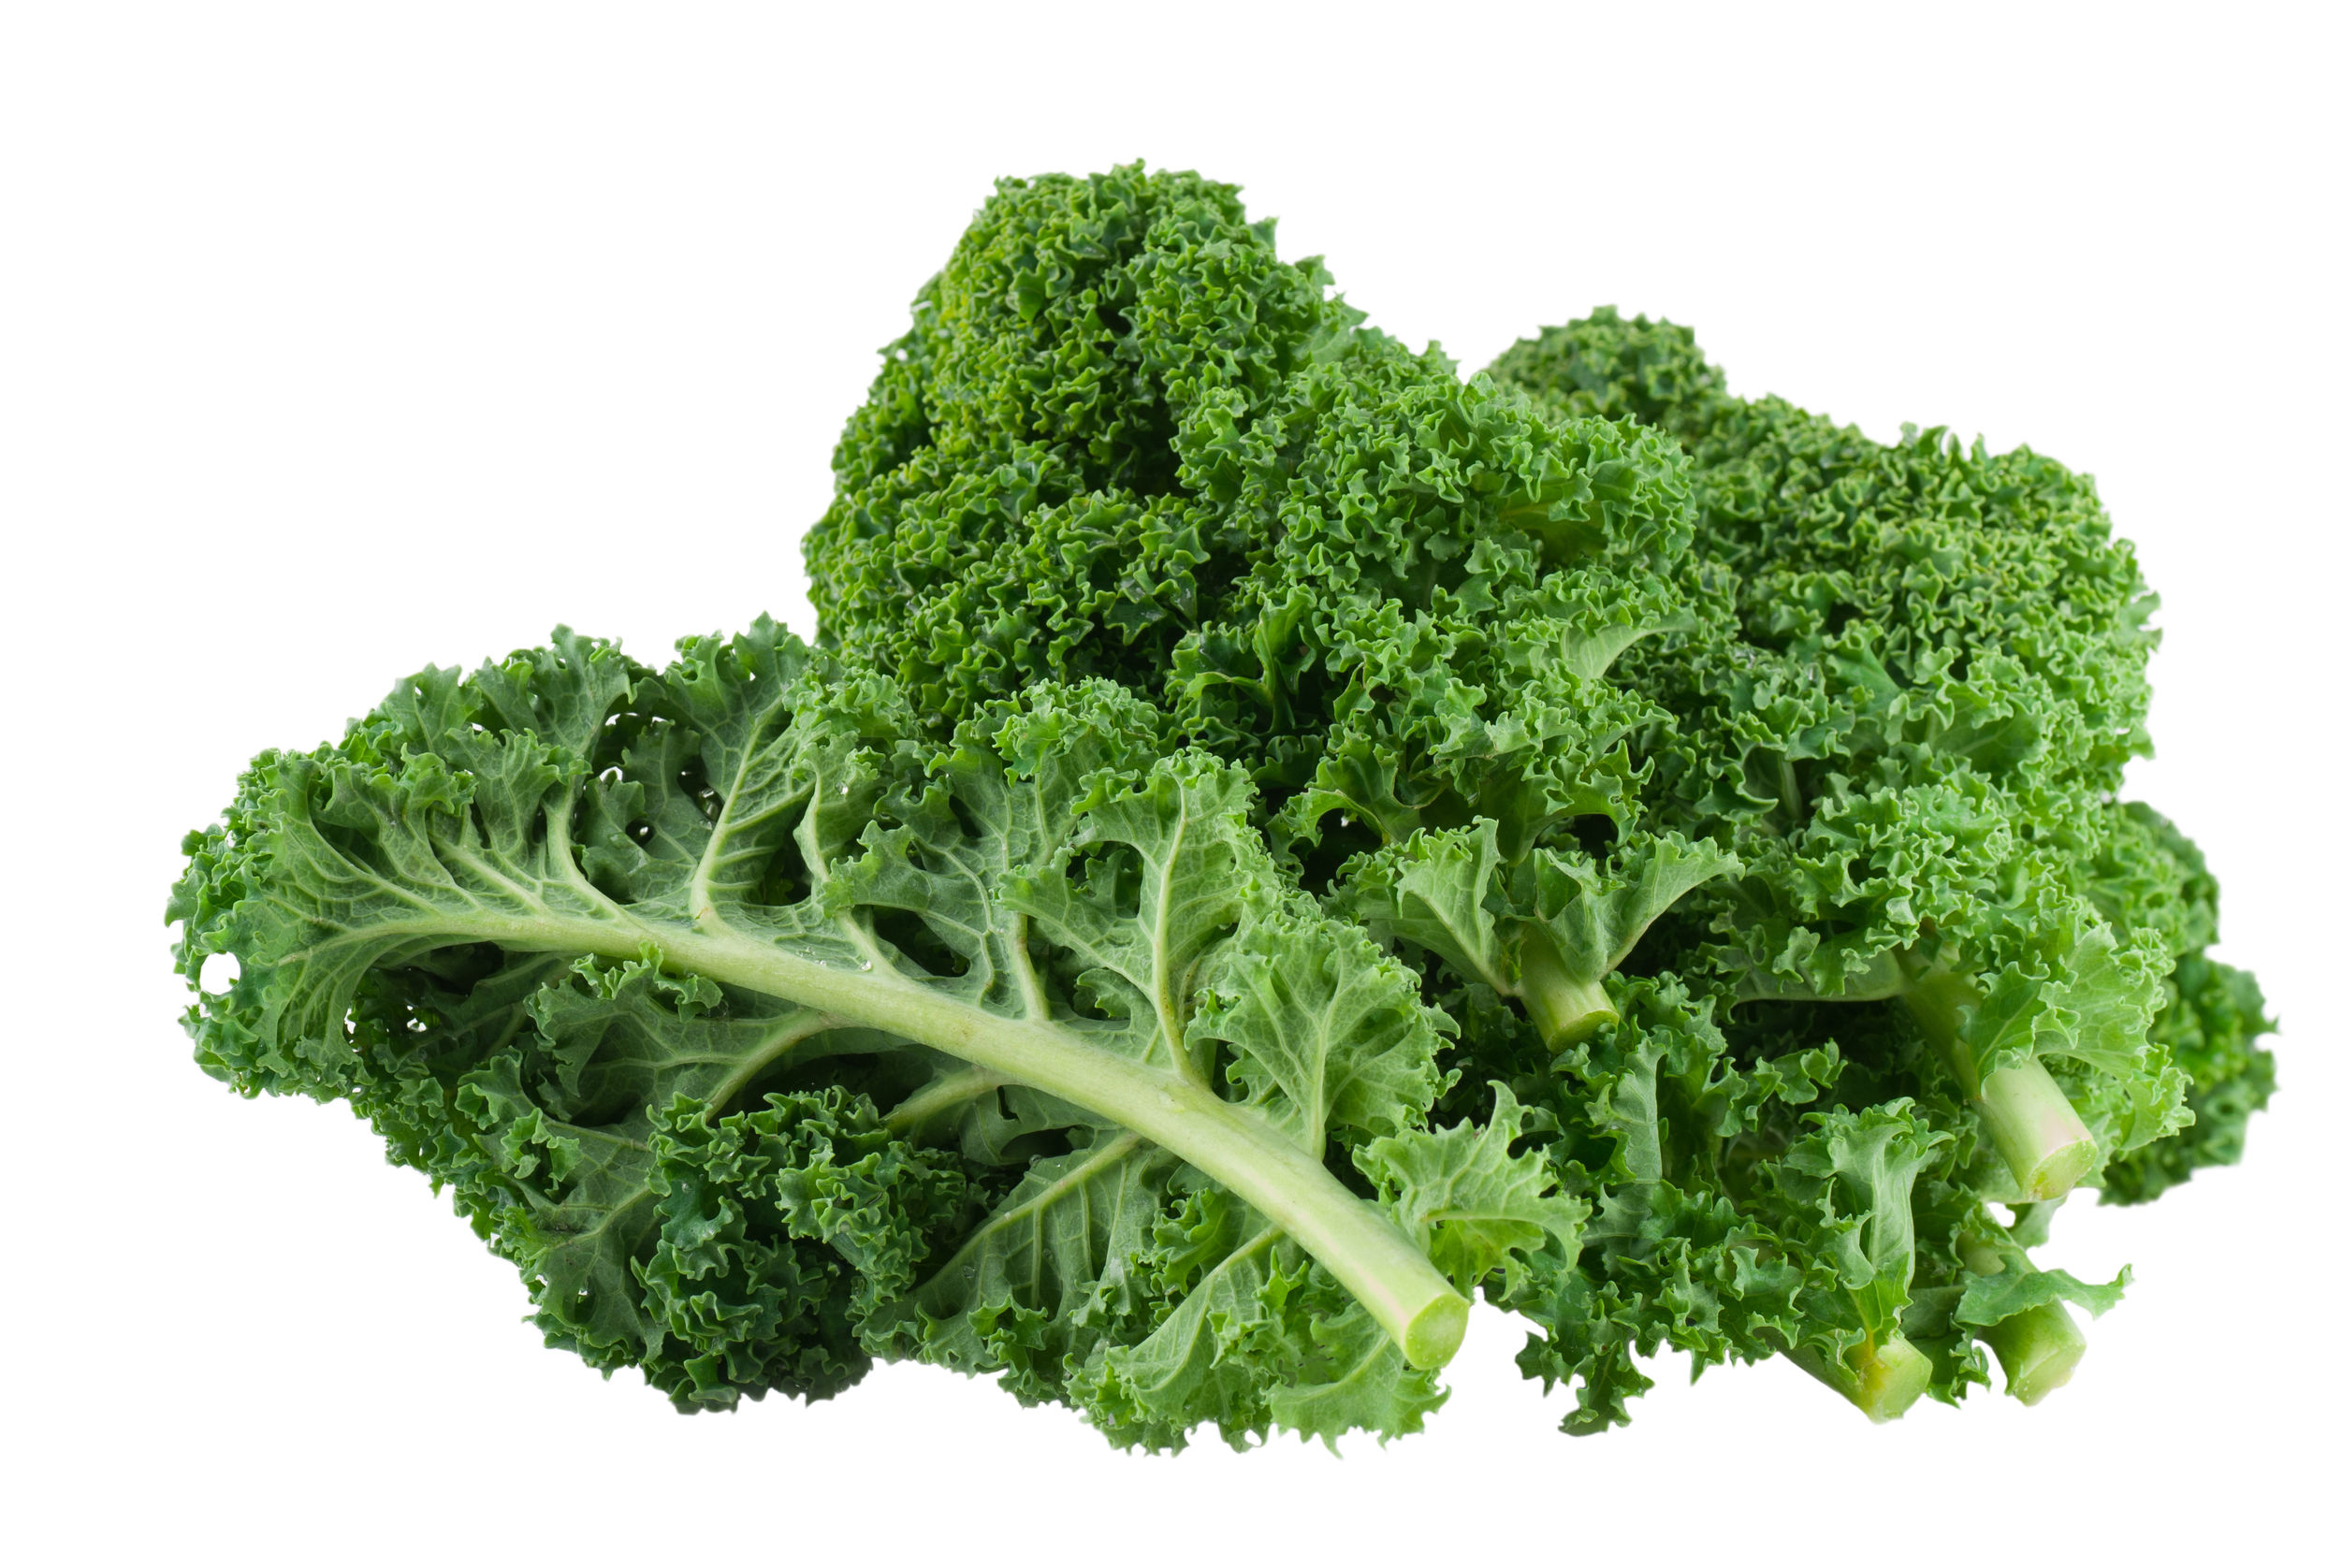 Organic Kale: Detoxification and Antioxidant Protection